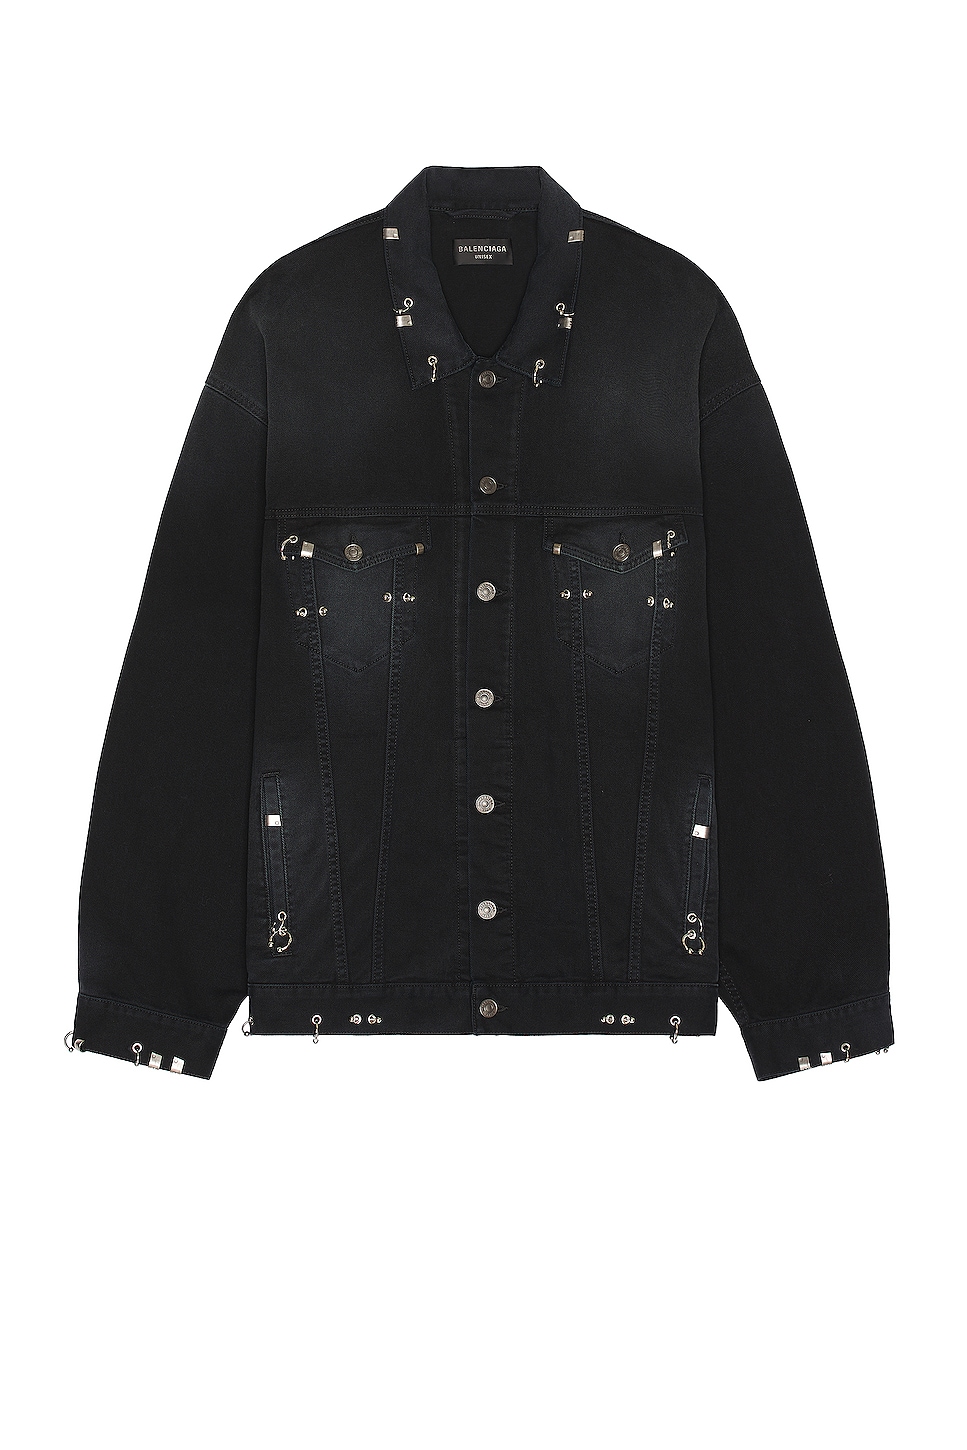 Image 1 of Balenciaga Pierced Jacket in Sunbleached Black